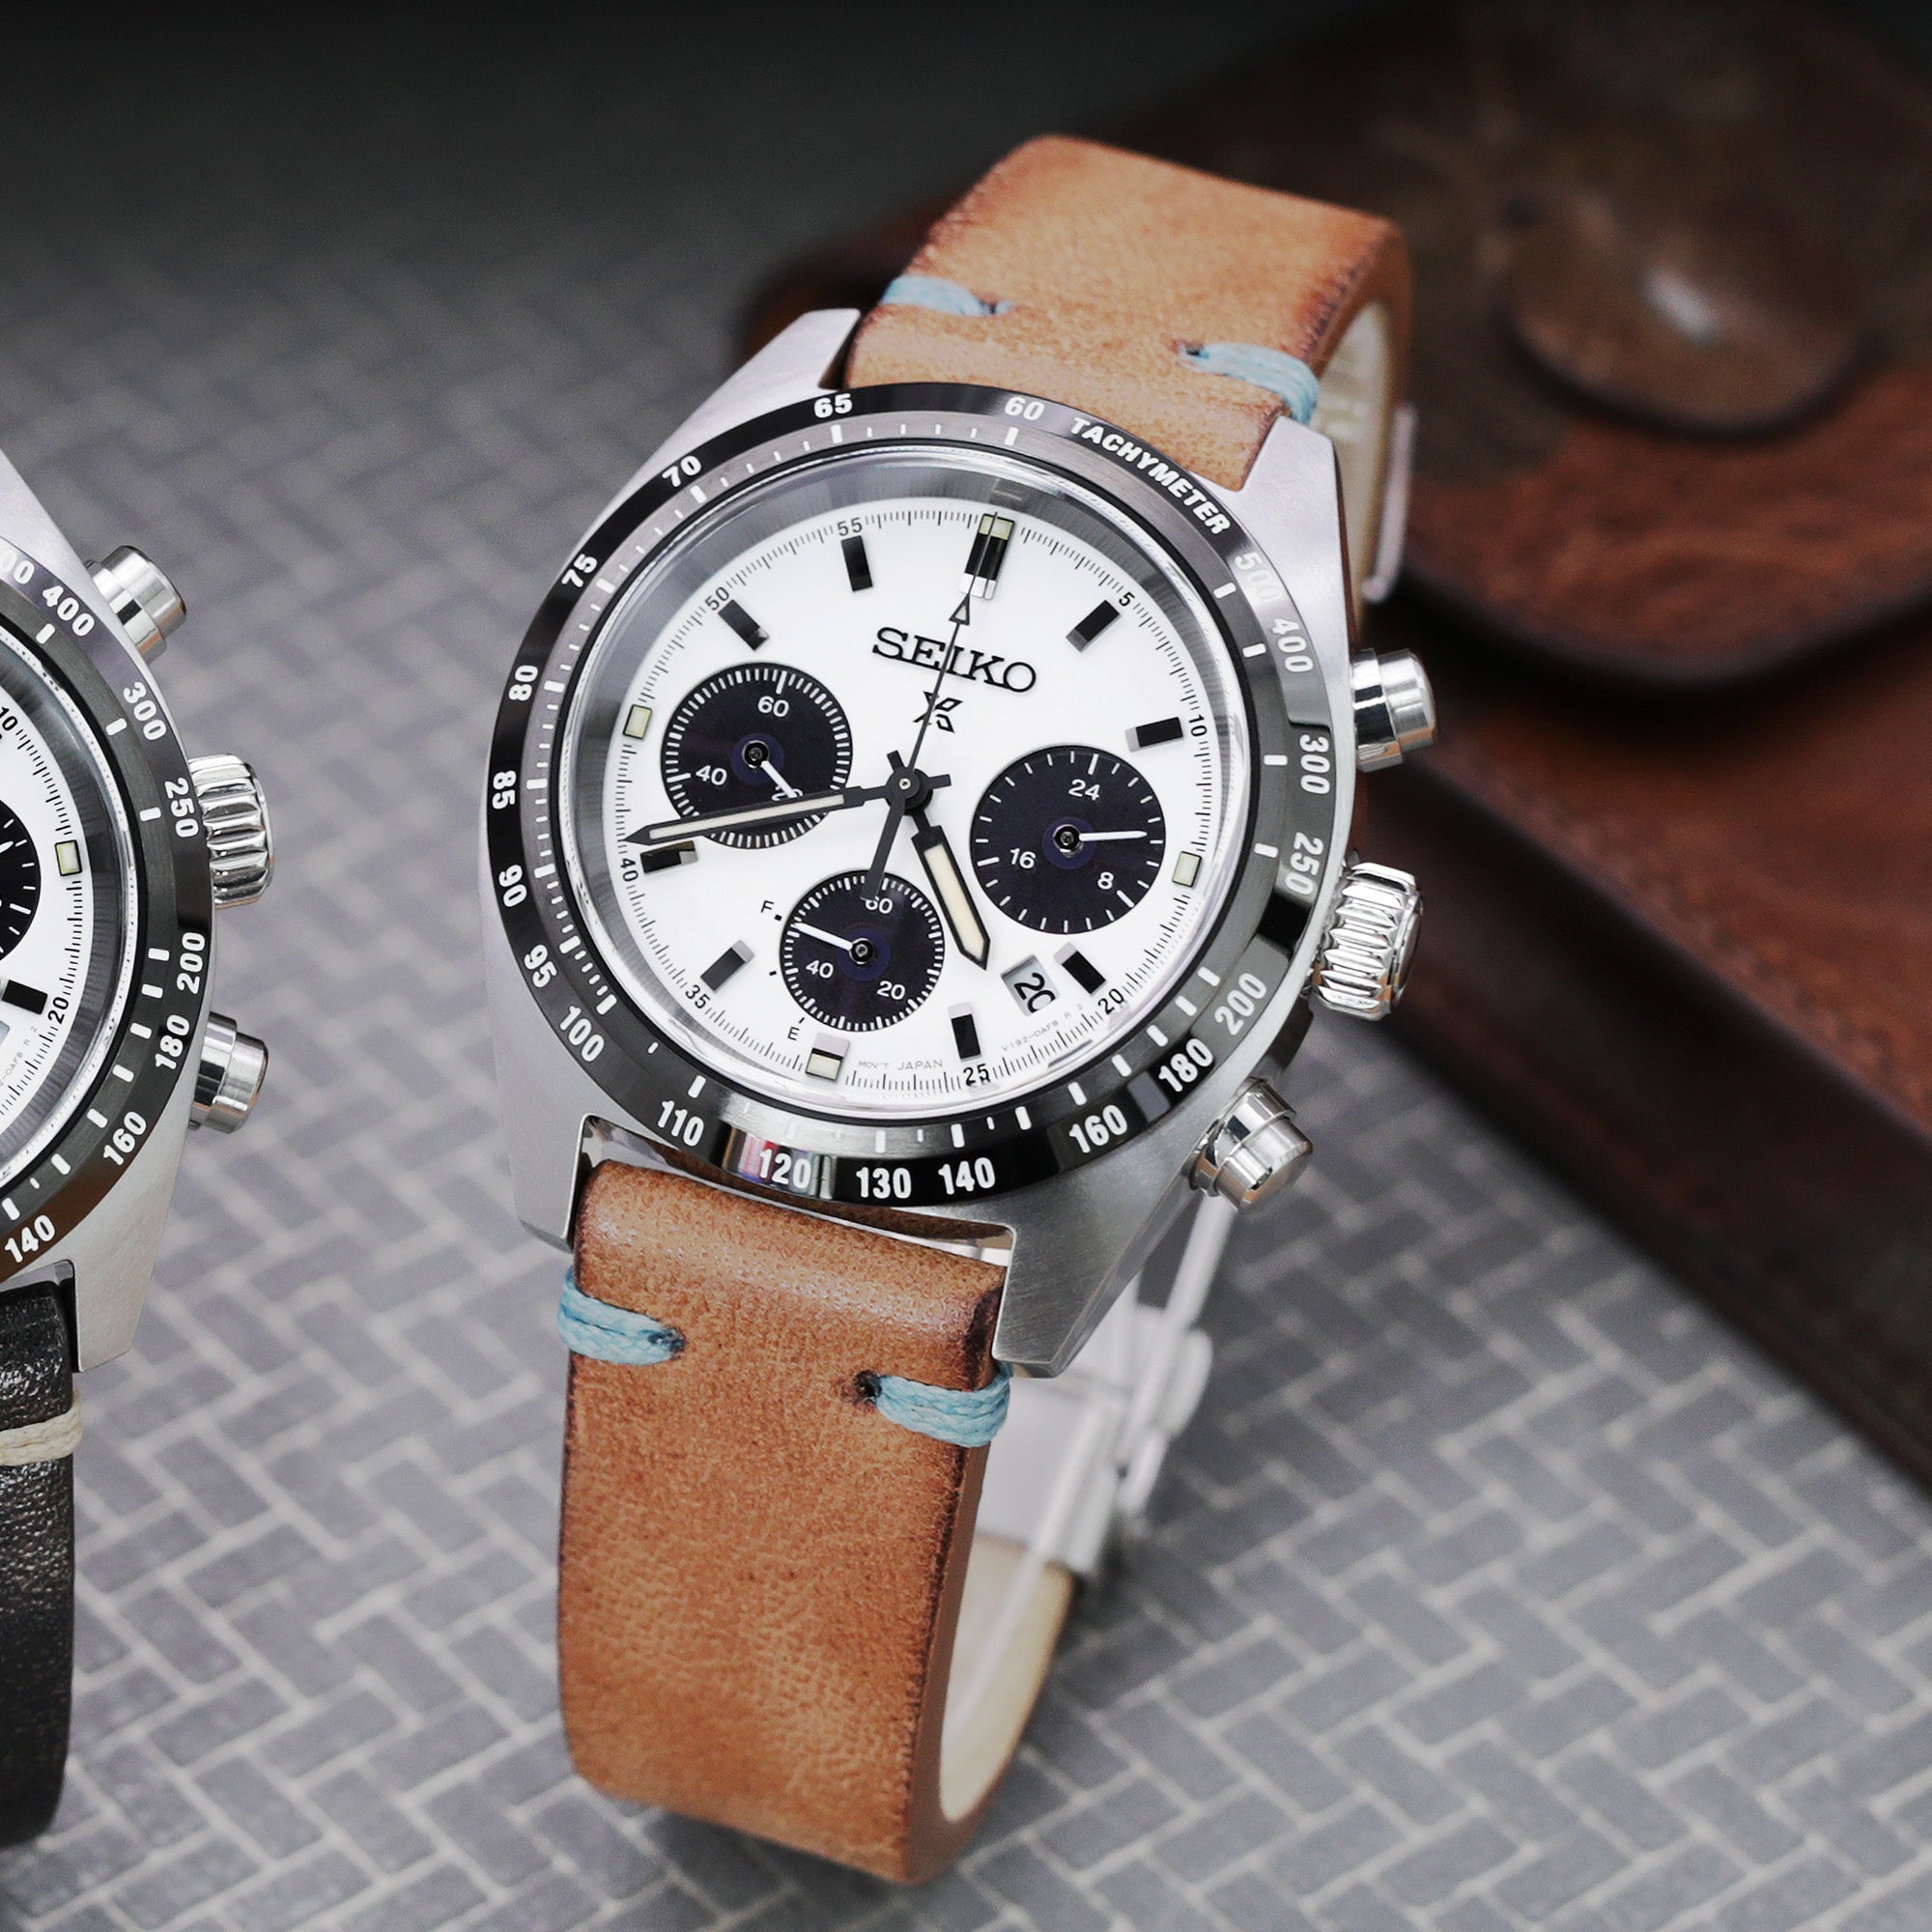 Top Handmade Italian Leather Watch Straps